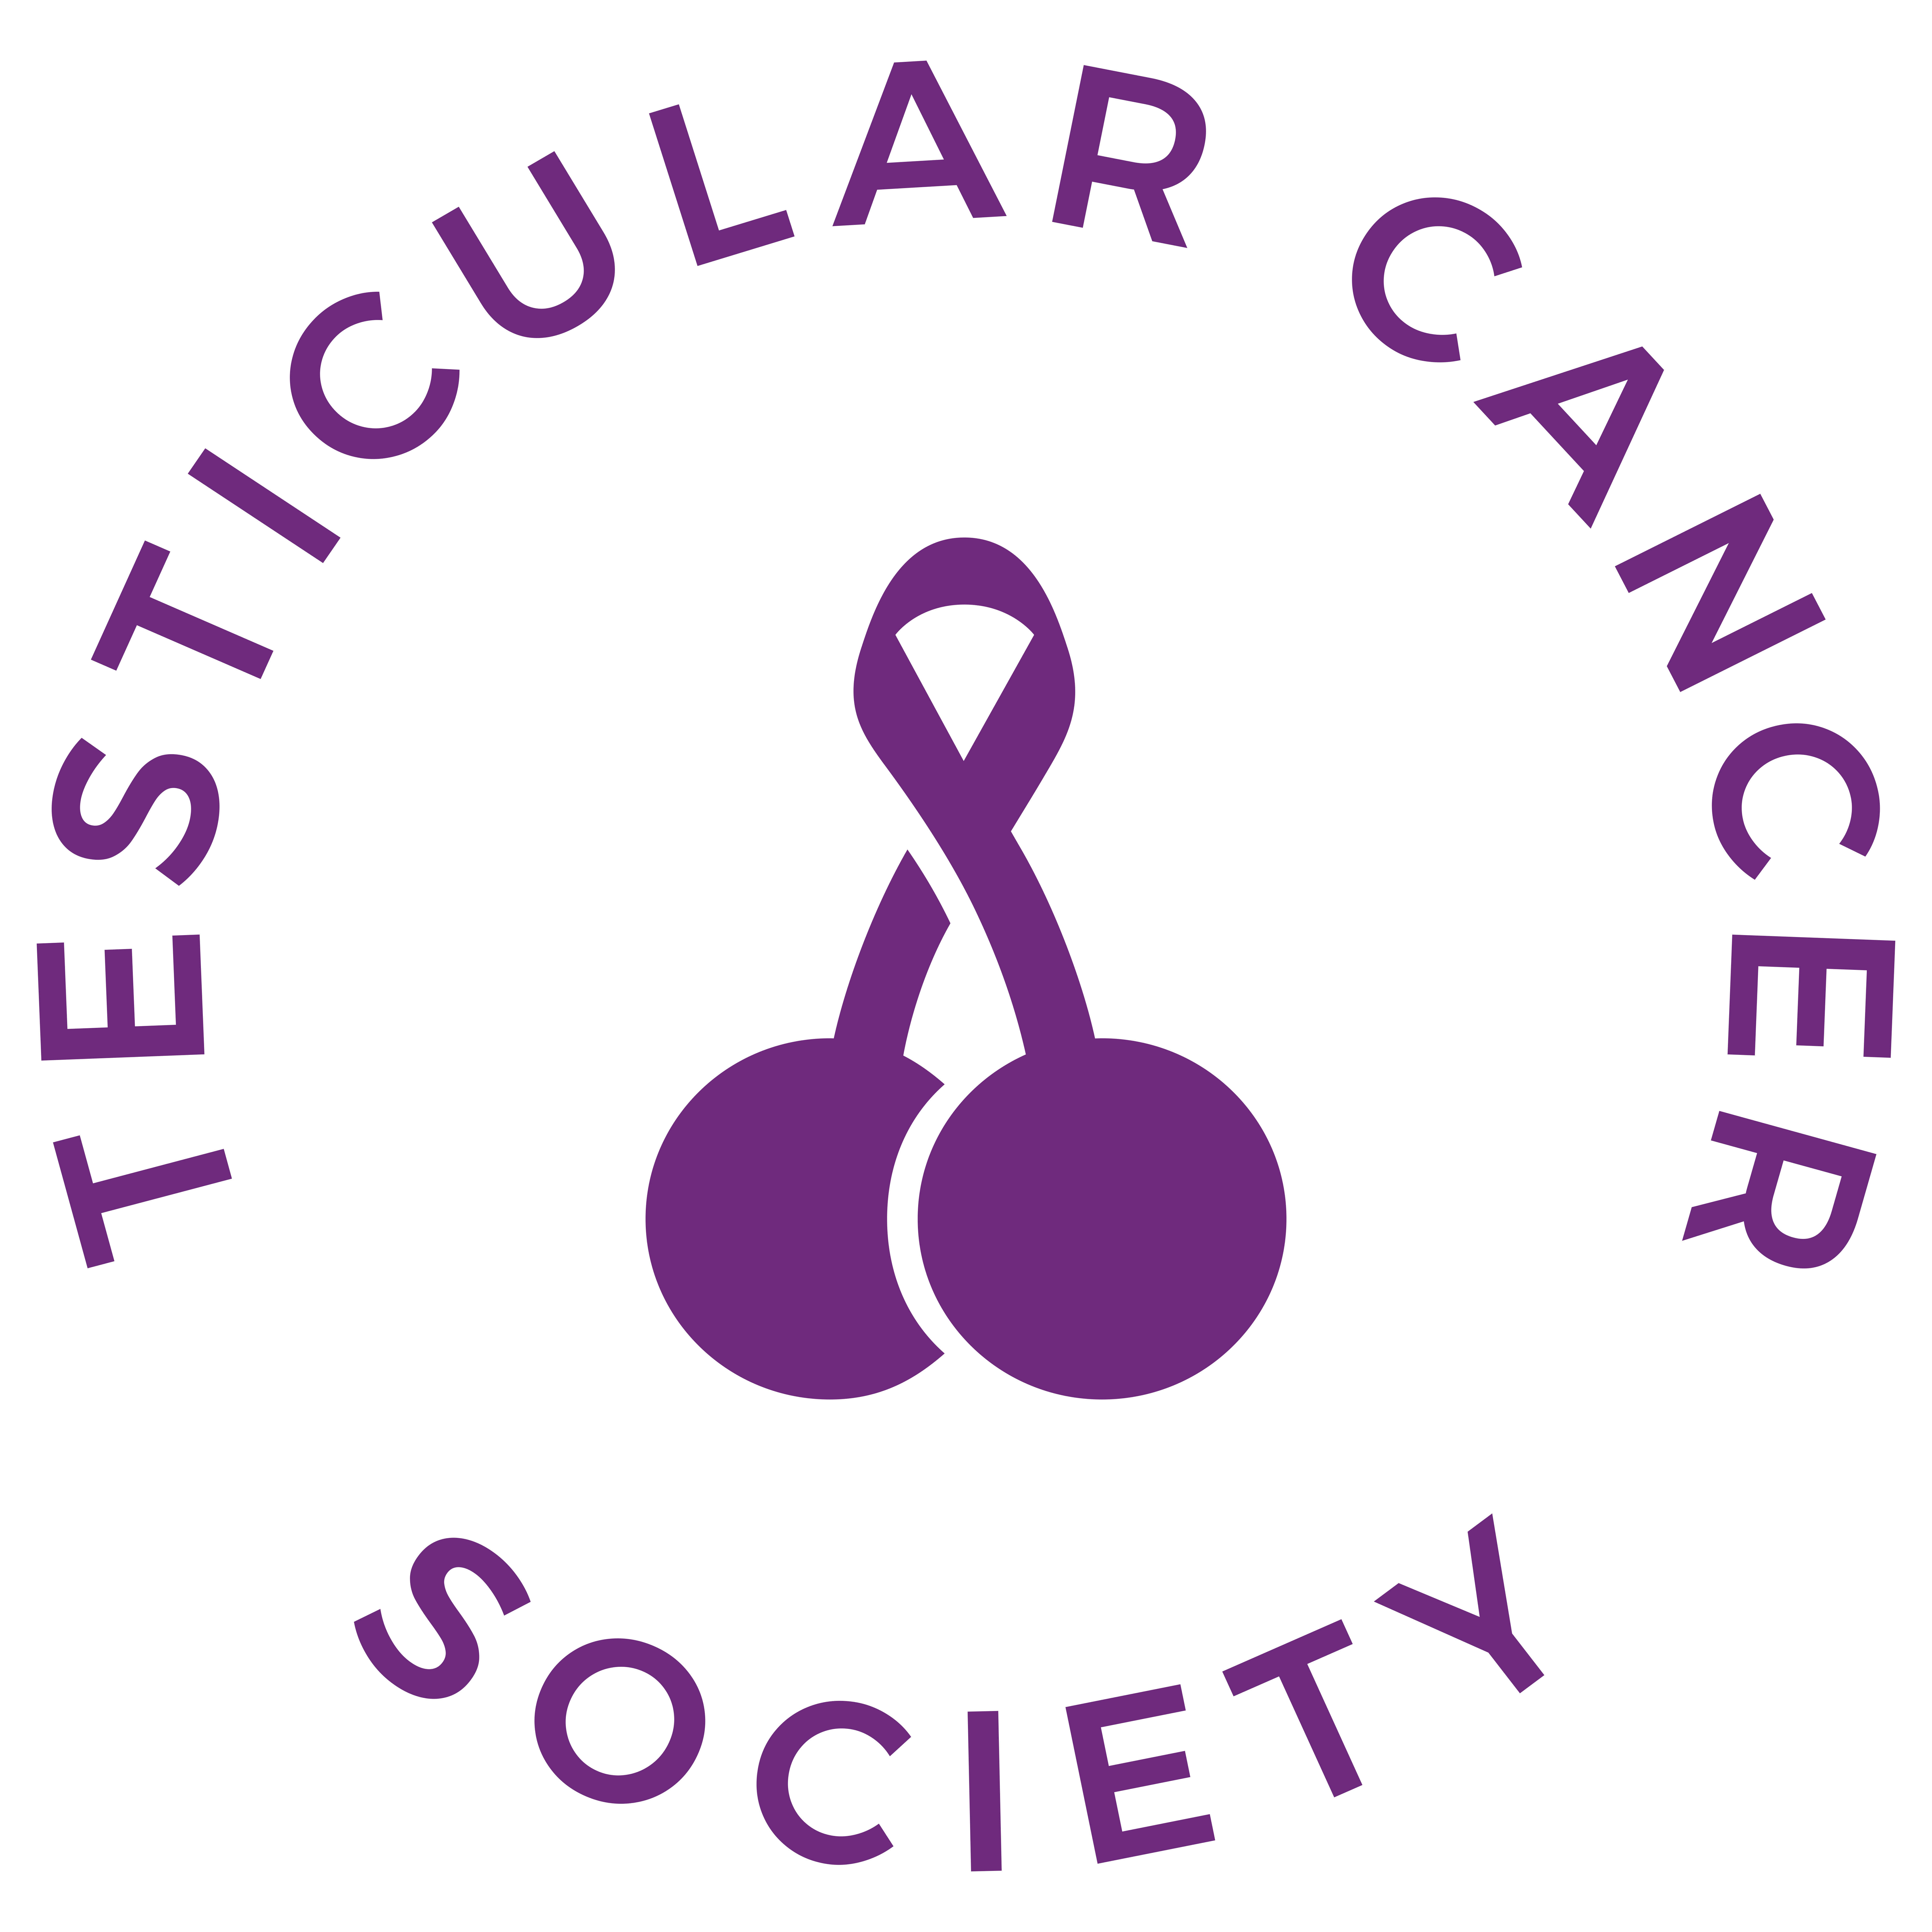 Testicular Cancer Society logo